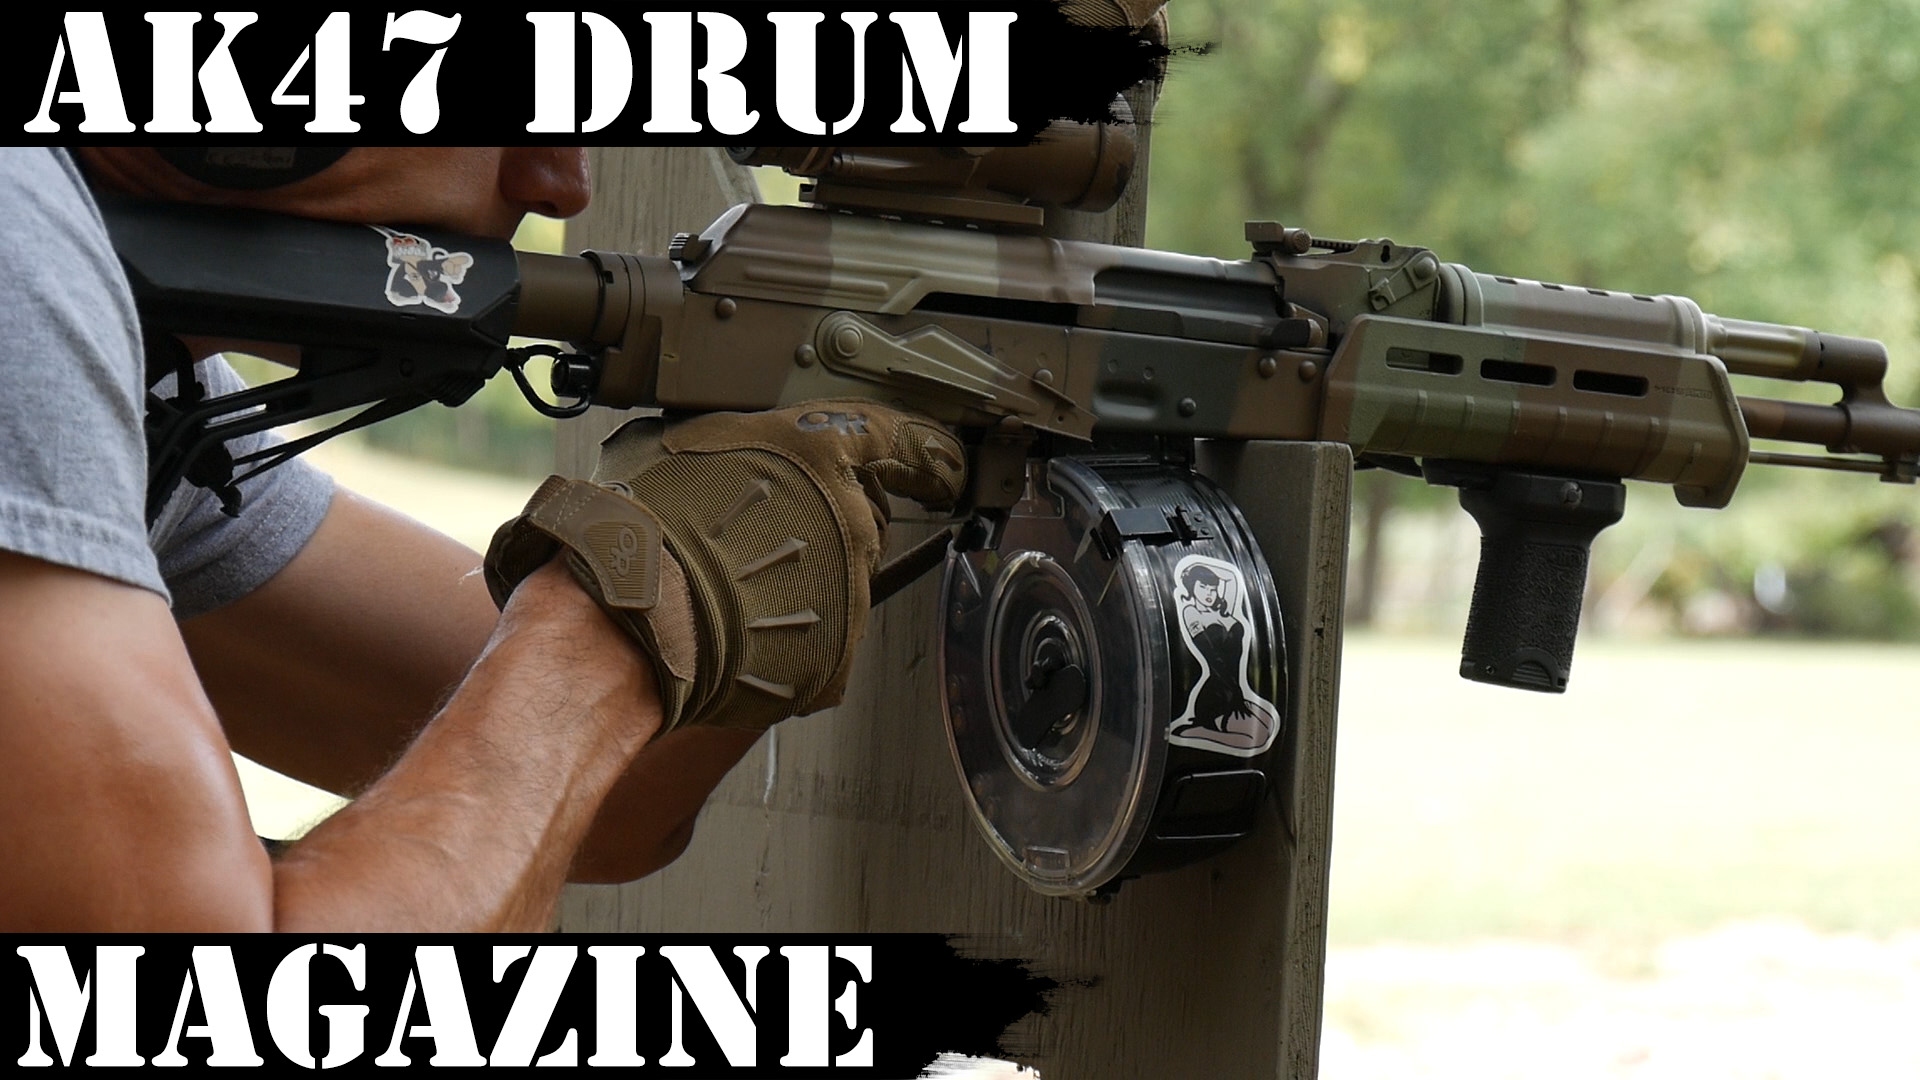 AK47 Drum Magazine.